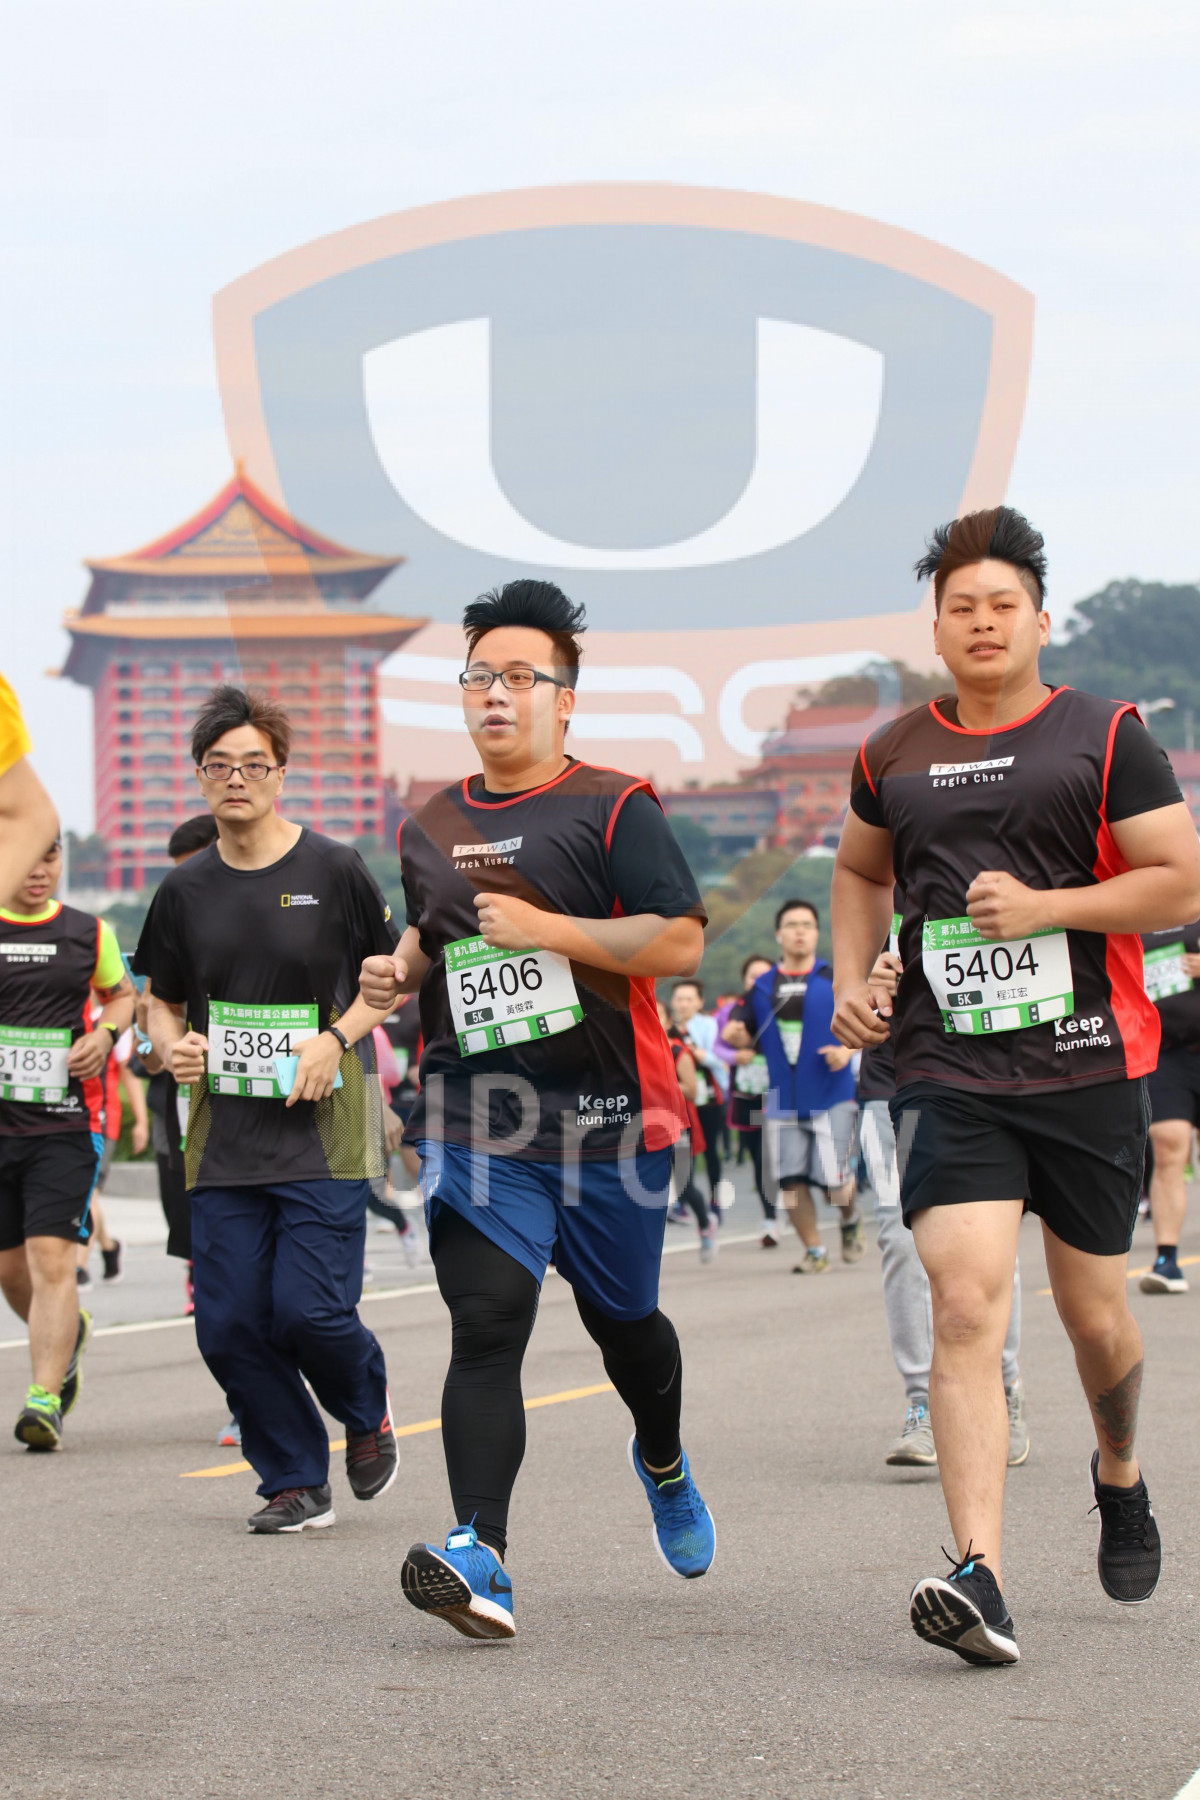 Eagle Chen,5406,183,5384,5404,Keep,Running|2018 第九屆阿甘盃公益路跑|Soryu Asuka Langley